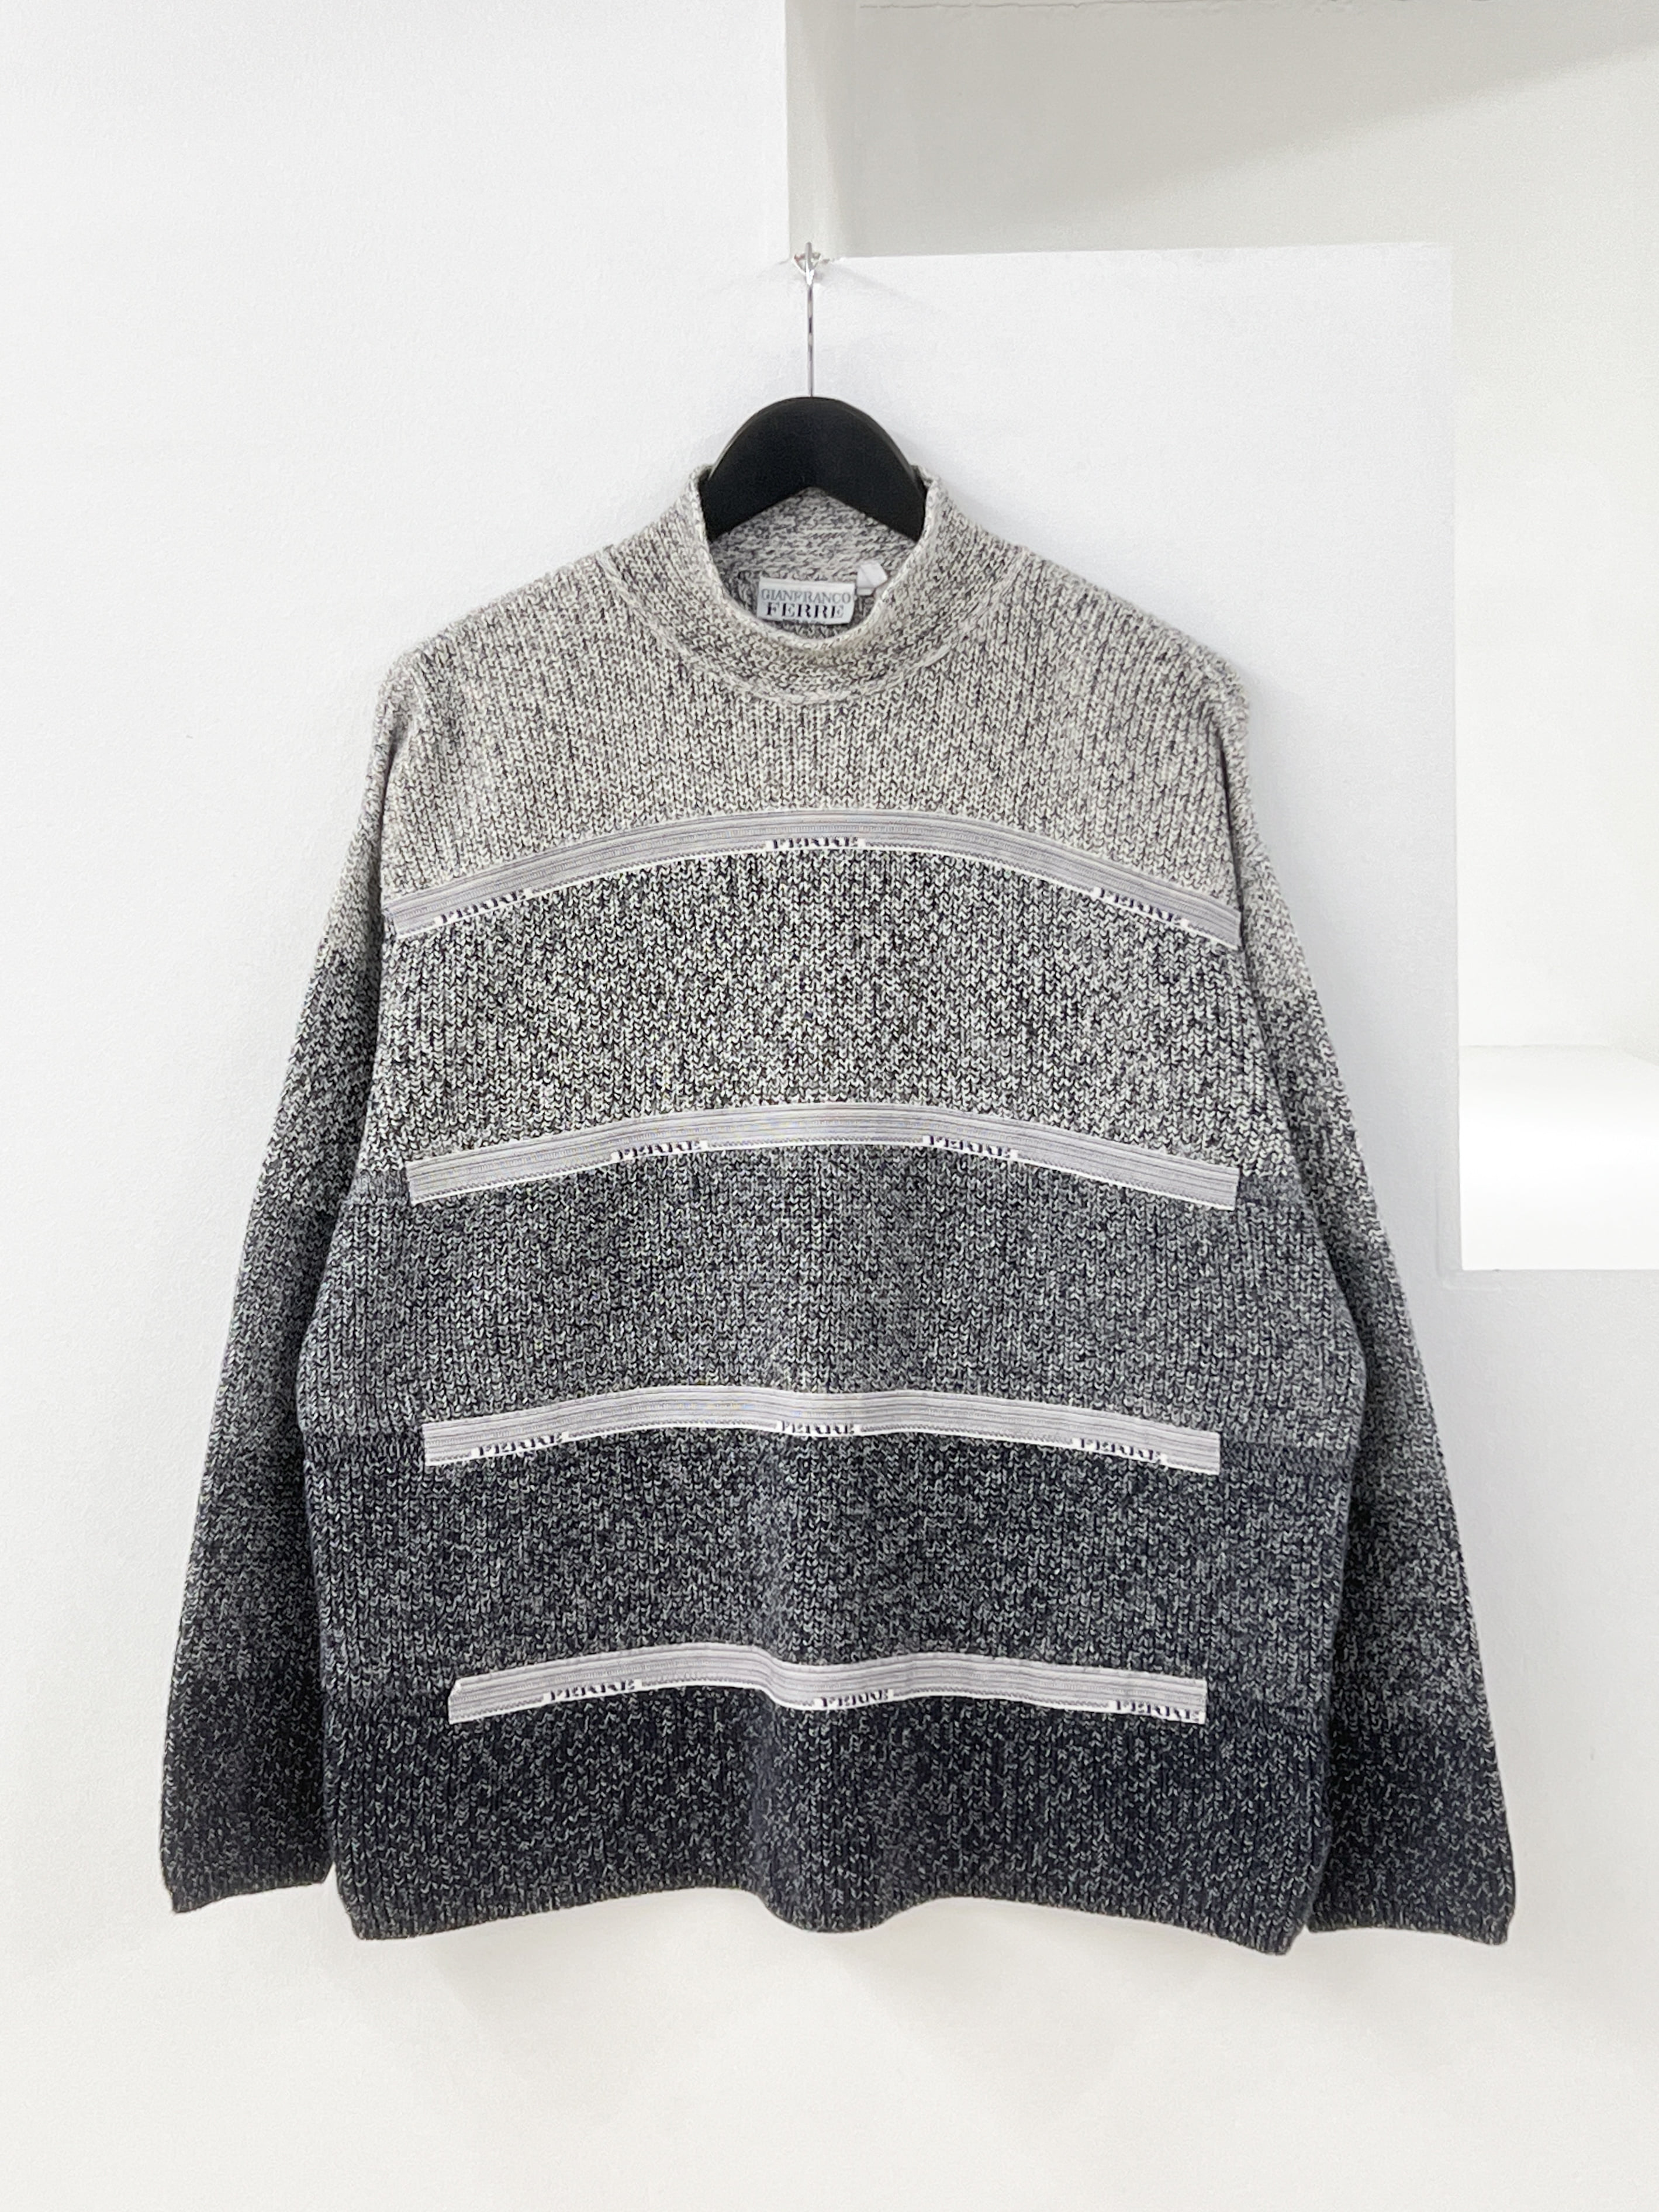 GIANFRANCO FERRE sweater